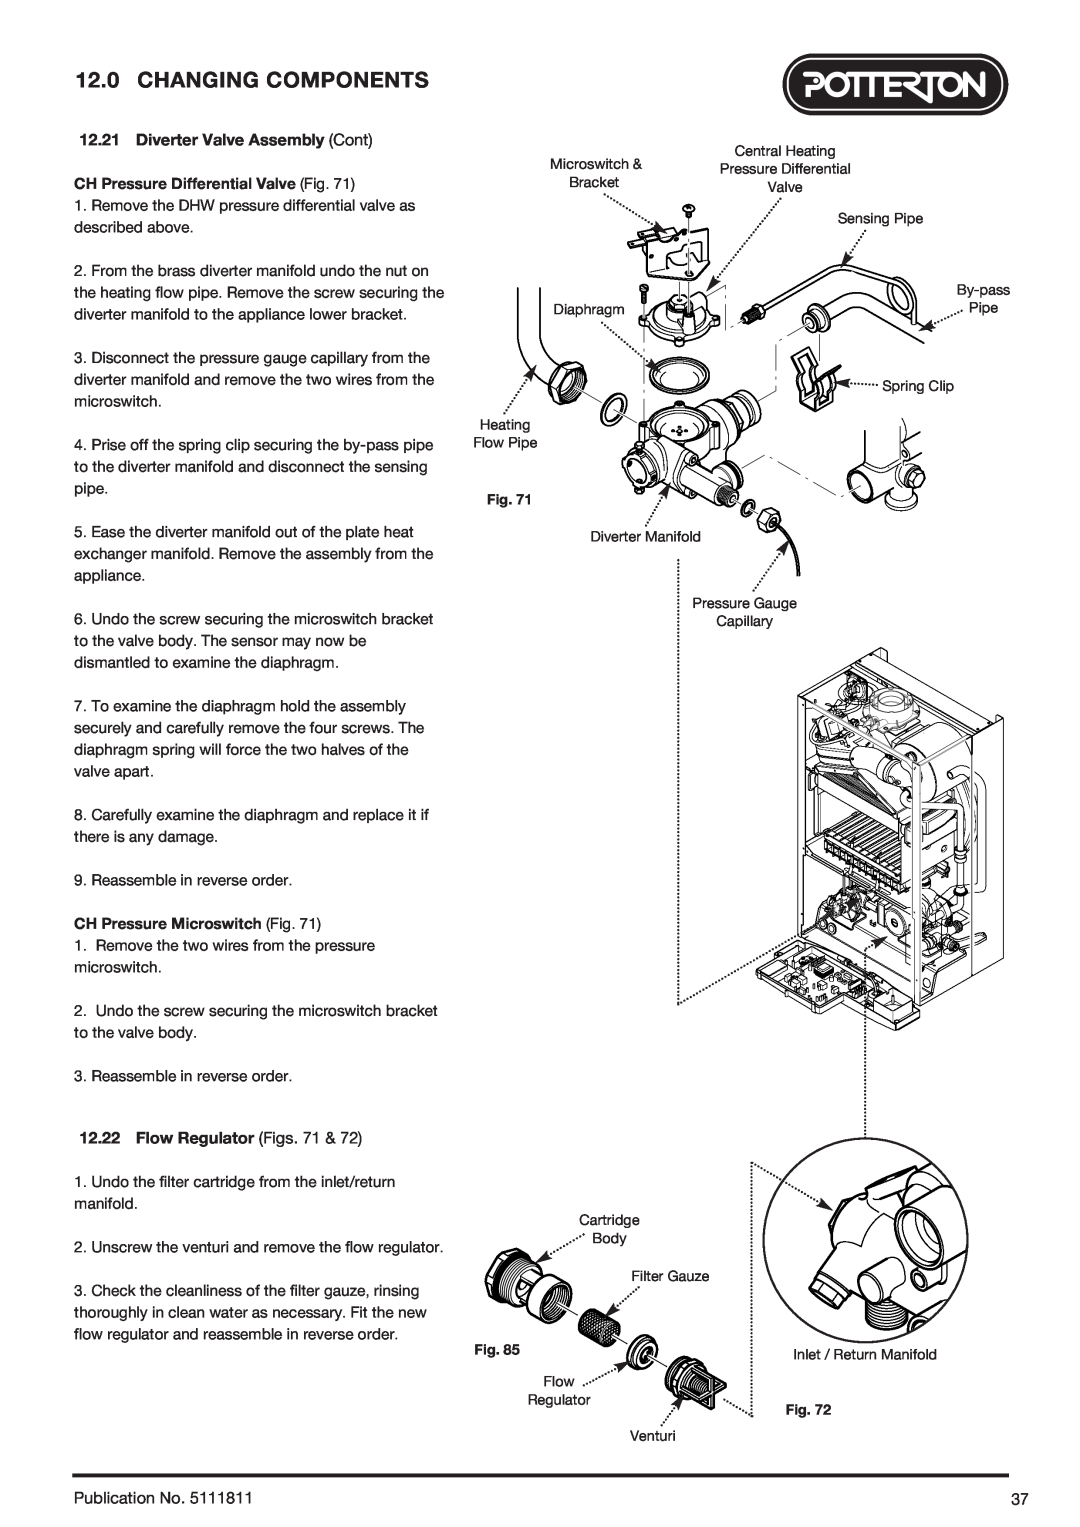 Baxi Potterton 24 Eco HE manual Diverter Valve Assembly Cont, Flow Regulator Figs. 71, Publication No 